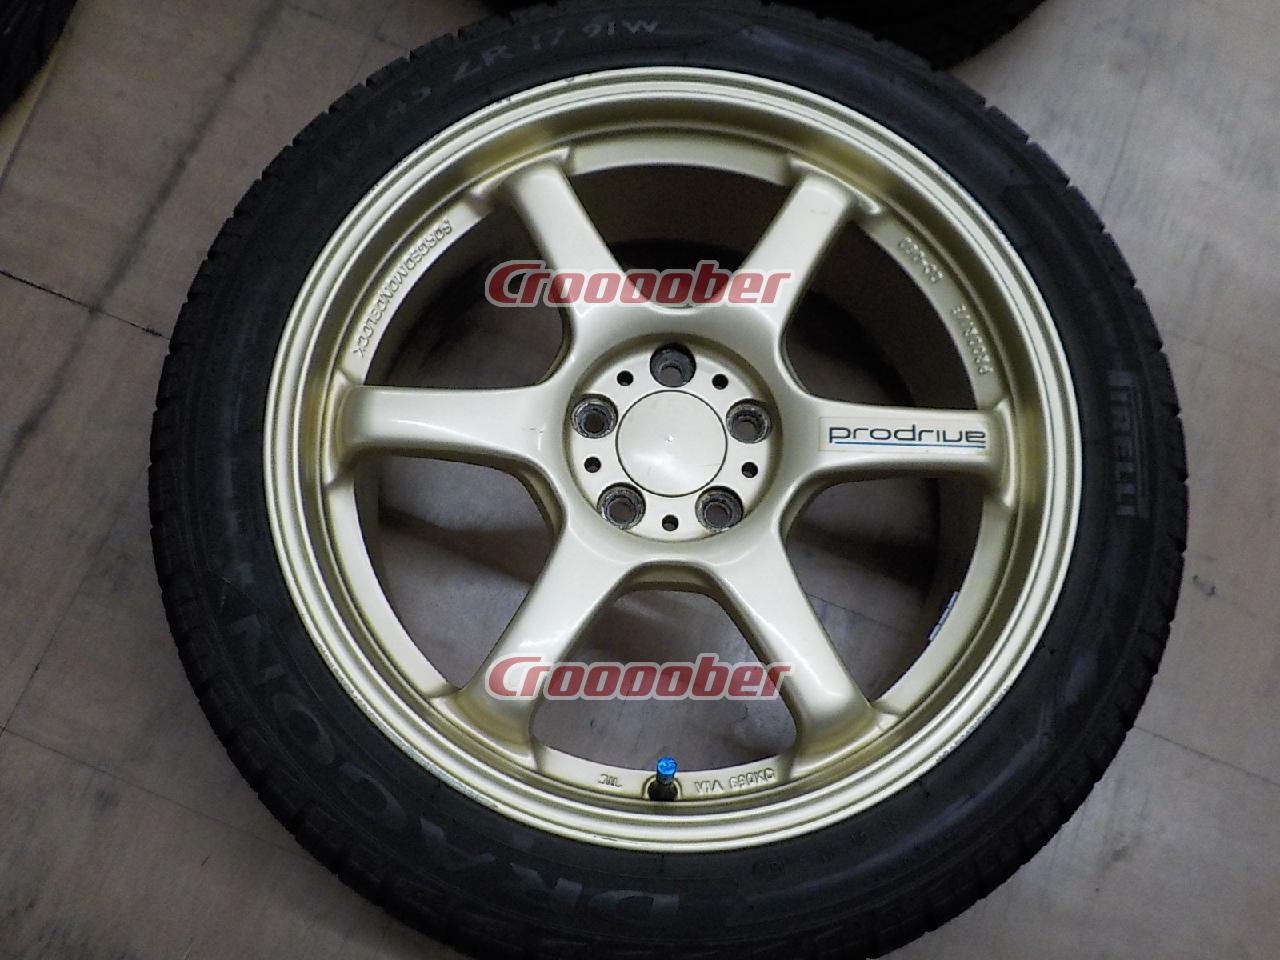 Bridgestone Prodrive GC-06D + Pirelli DRAGON - 7.5Jx17+48100-5H 